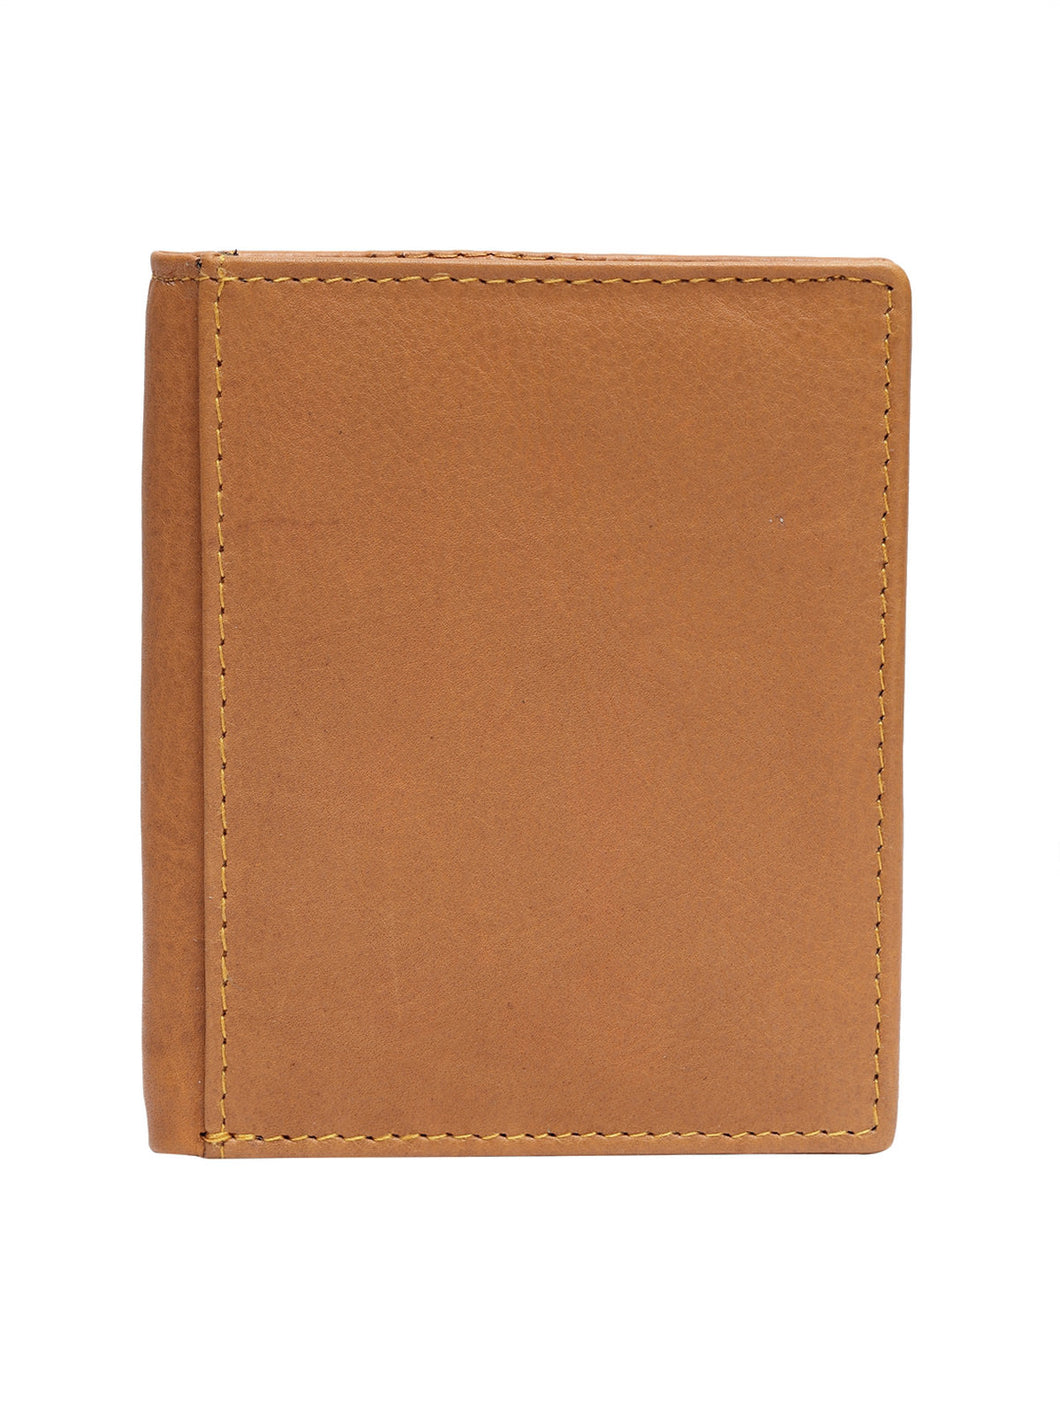 Teakwood Genuine Leather Wallets - Tan